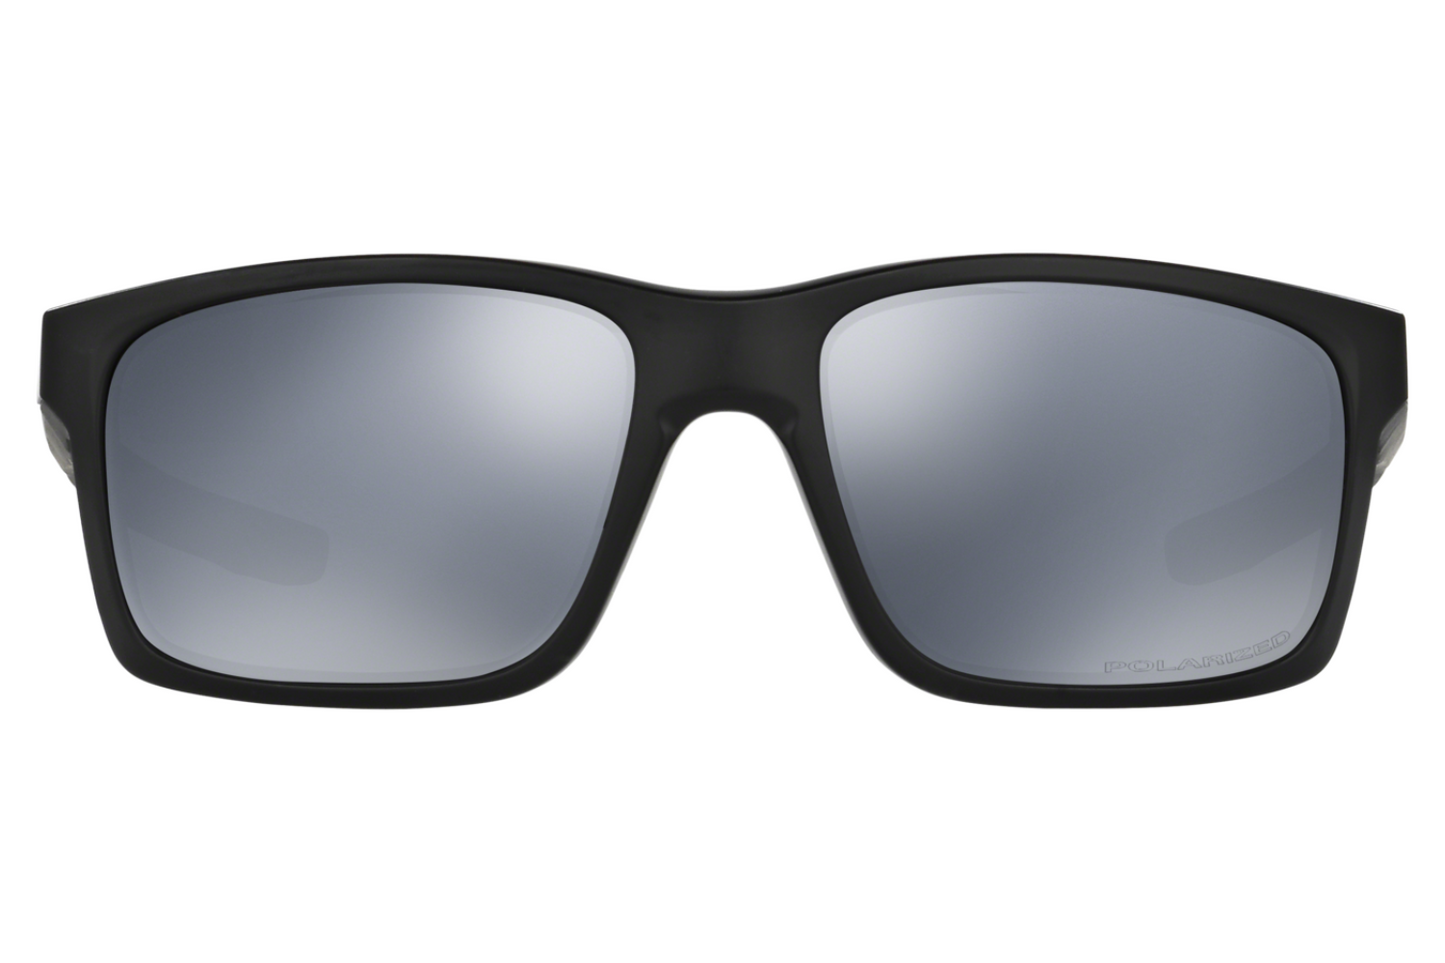 Oakley Sunglasses MAINLINK OO9264 57 POLARIZED